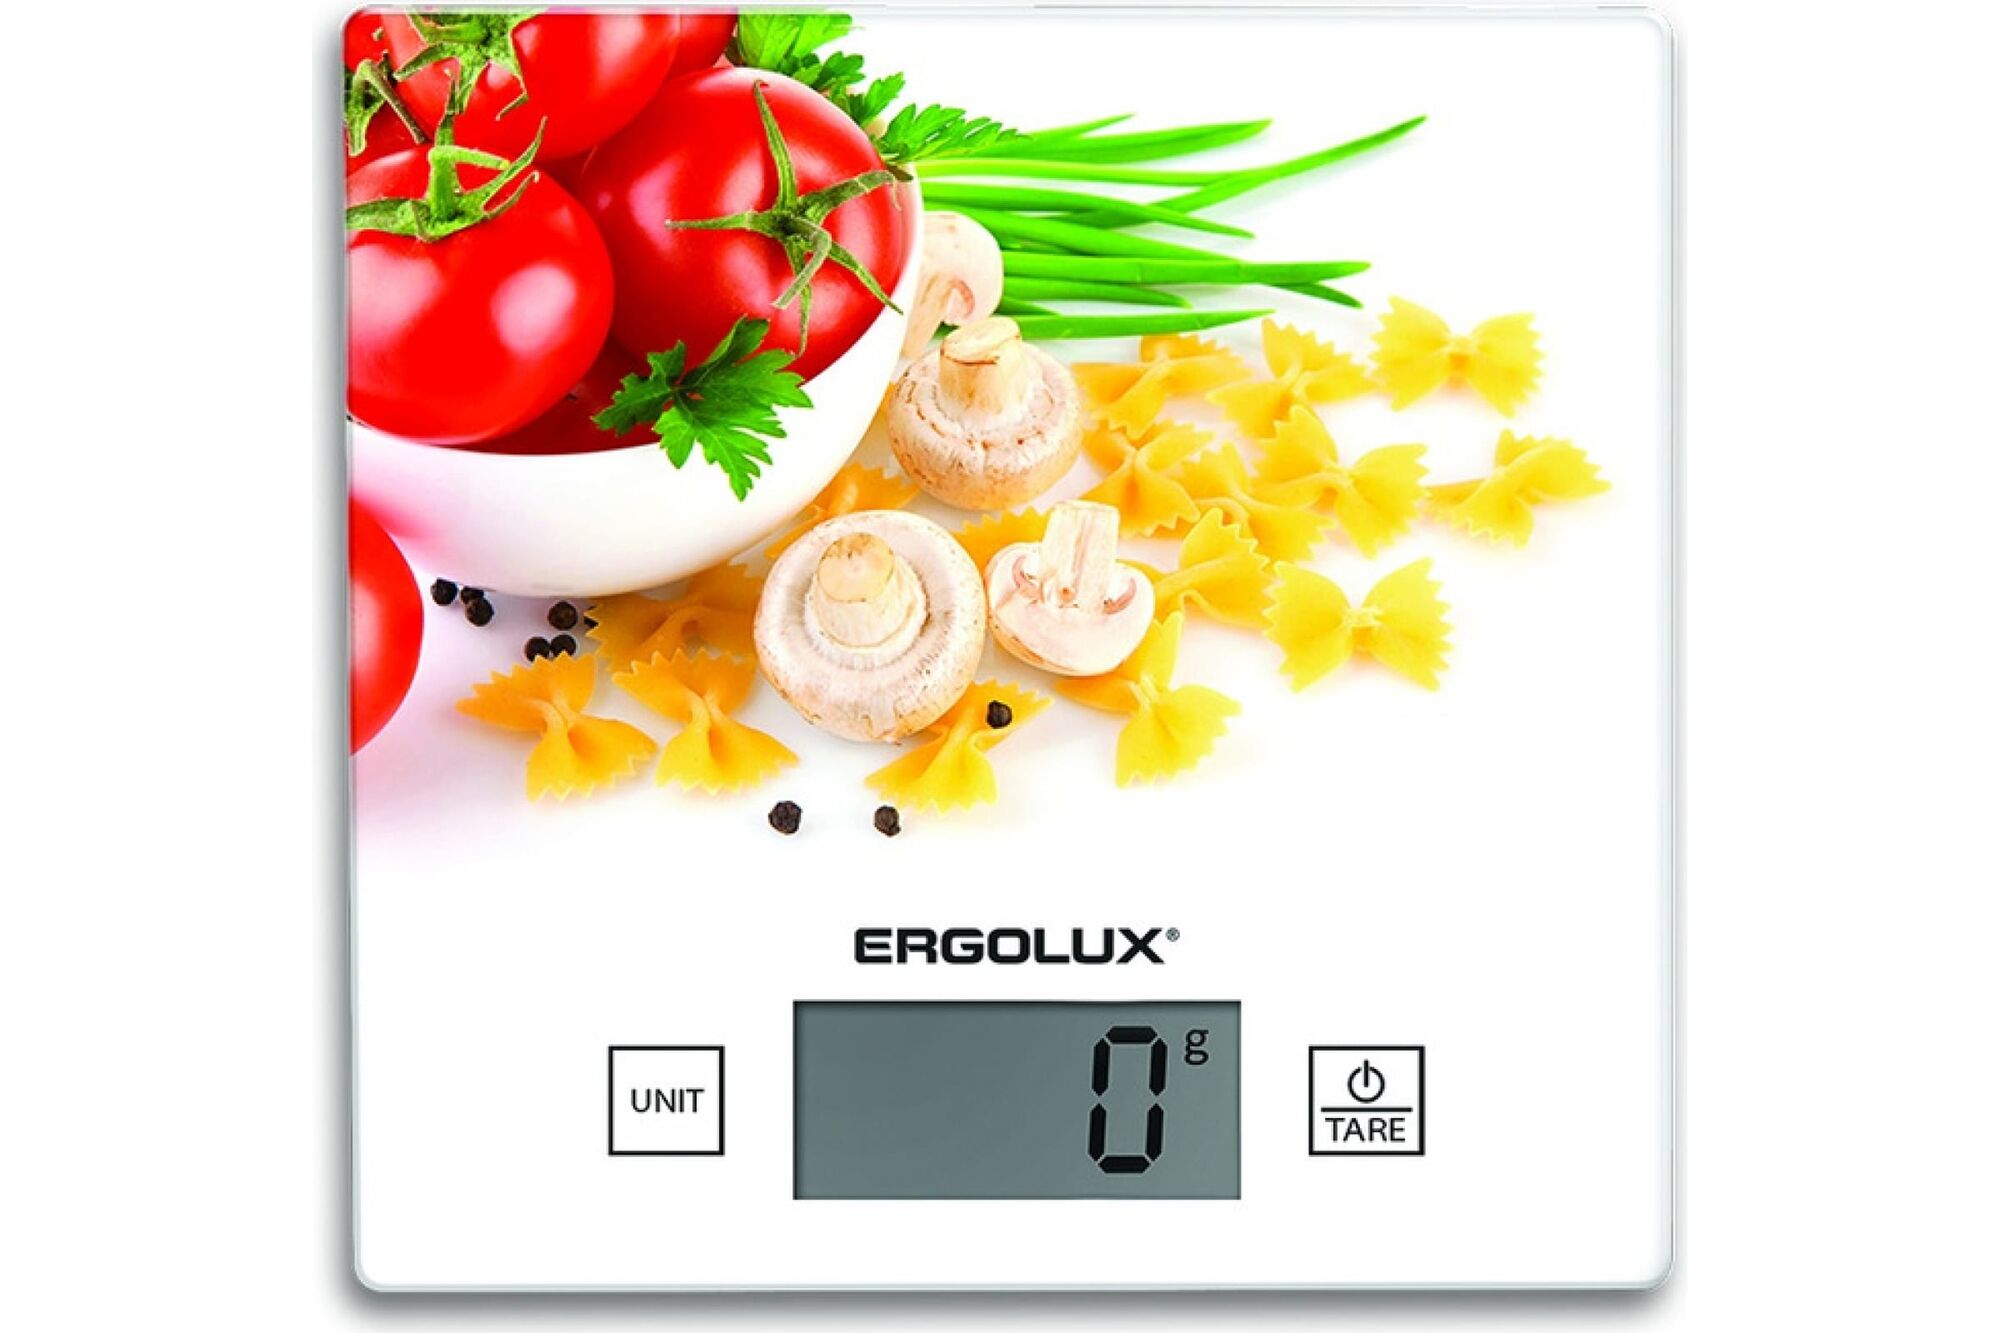 Кухонные весы ERGOLUX ELX-SK01-С36 паста, томаты и грибы, до 5 кг, 150х150 мм 14360